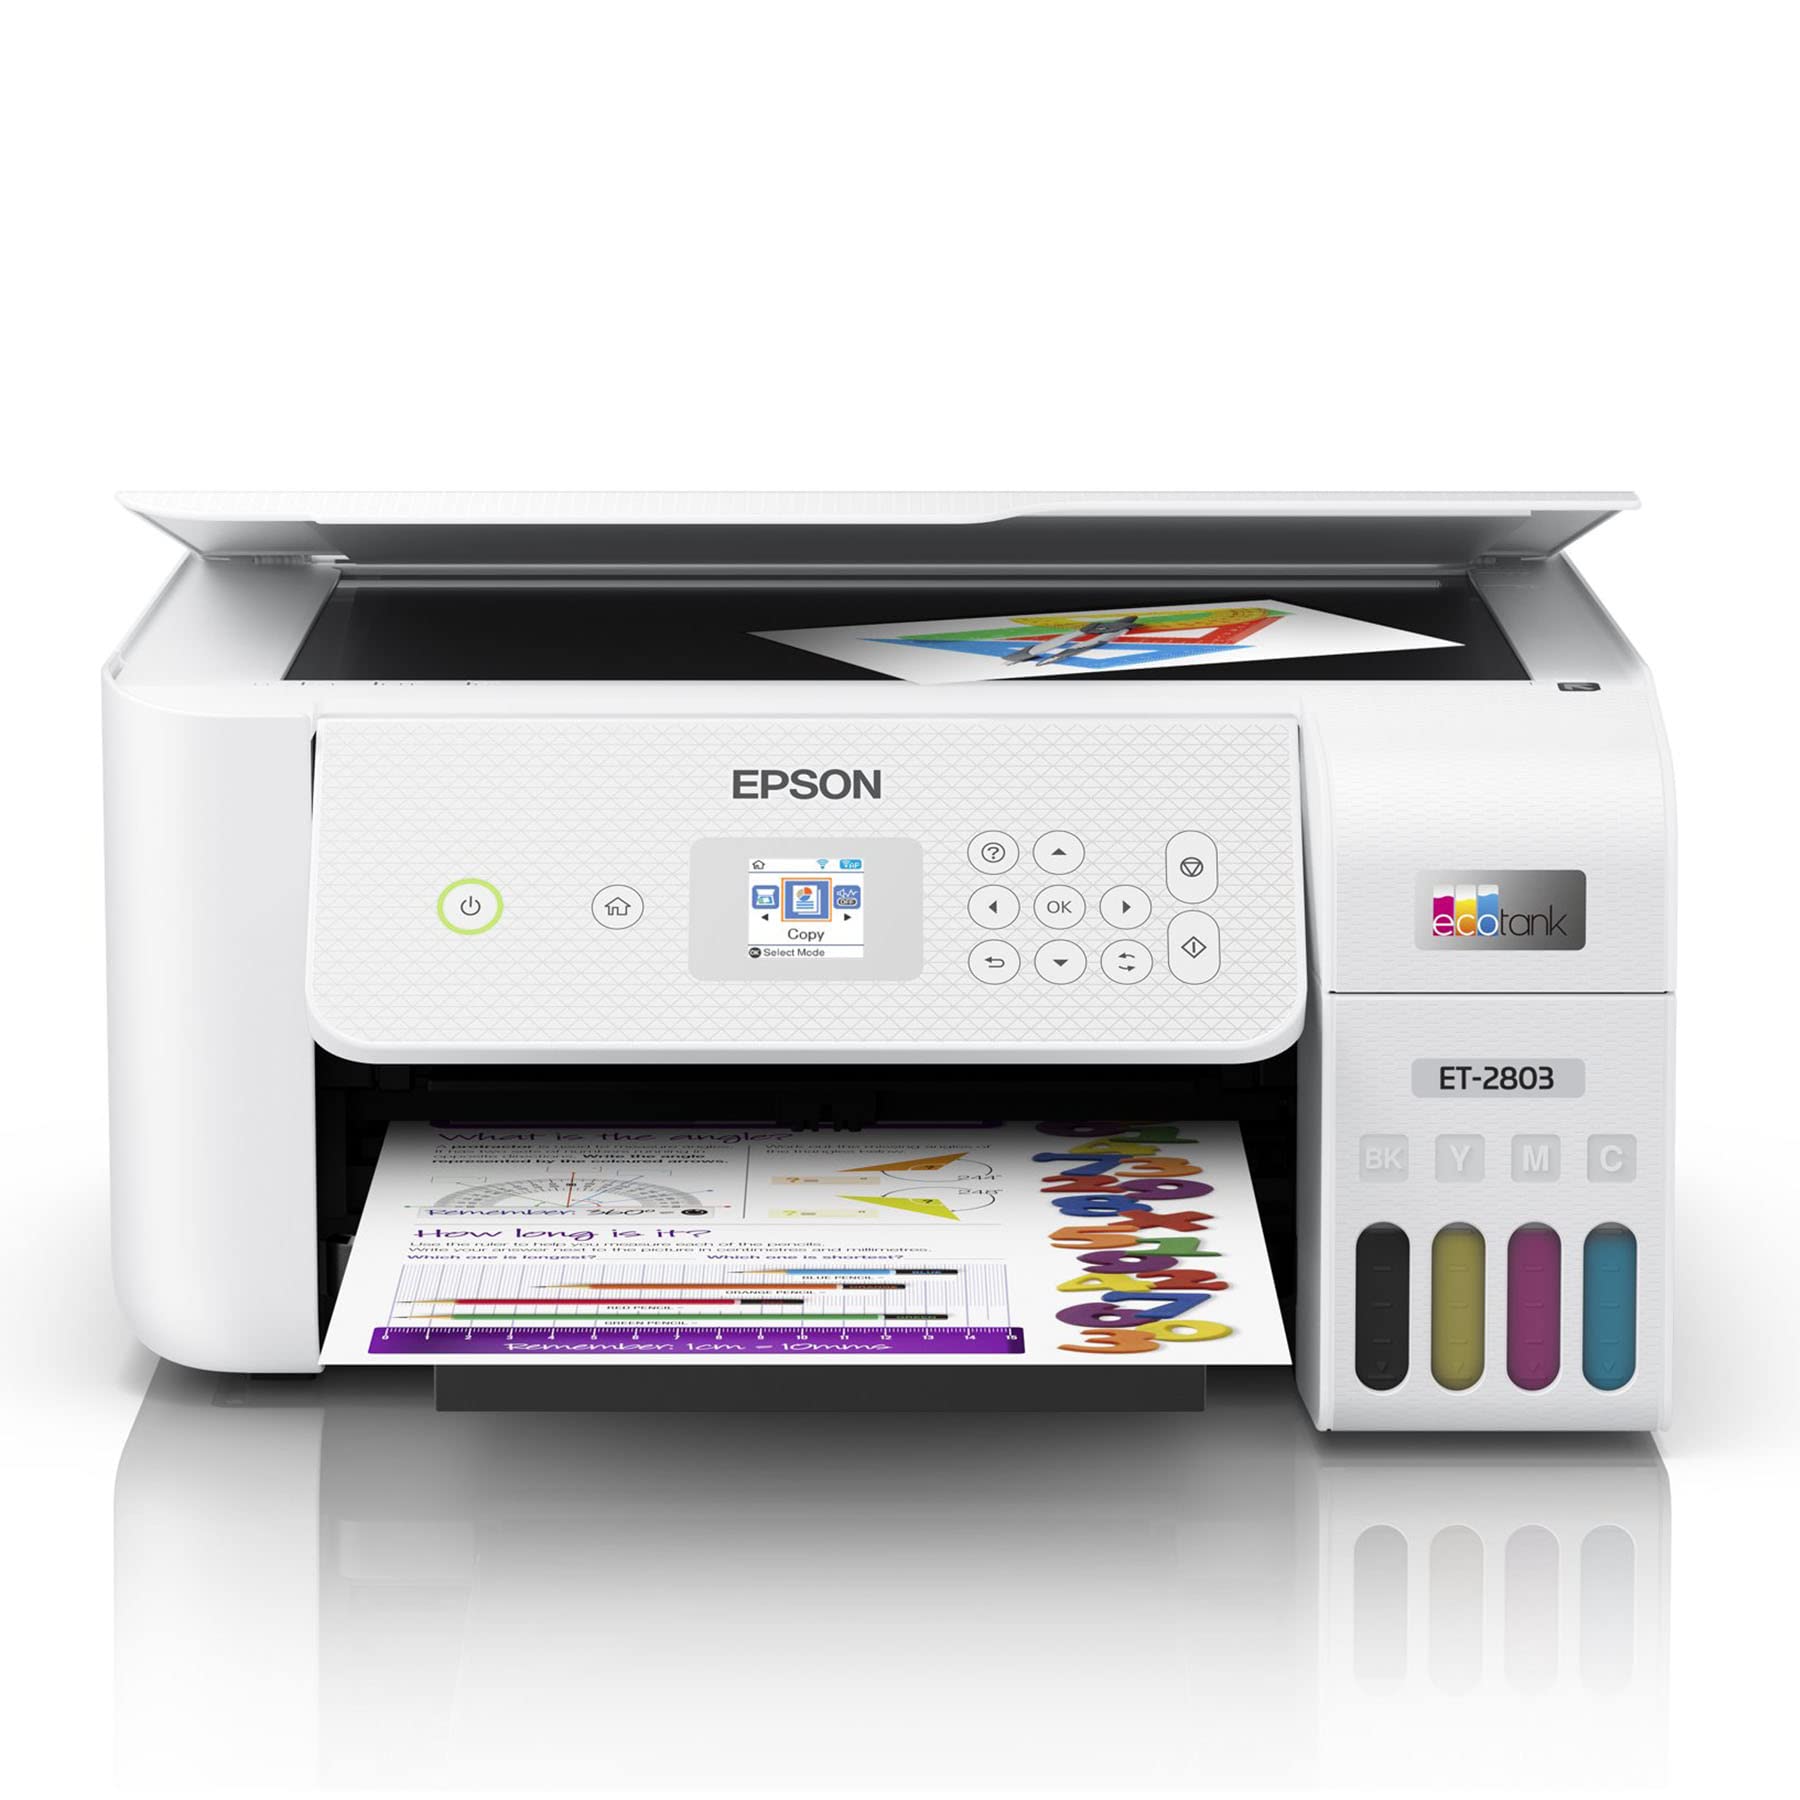 Epson EcoTank 2803 系列一体式彩色喷墨无墨盒超级打印机 I 打印复印扫描 I 无线 I 移动和语音激活打印 I 打印速度高达 10 ISO PPM I 1.44 英寸彩色 LCD